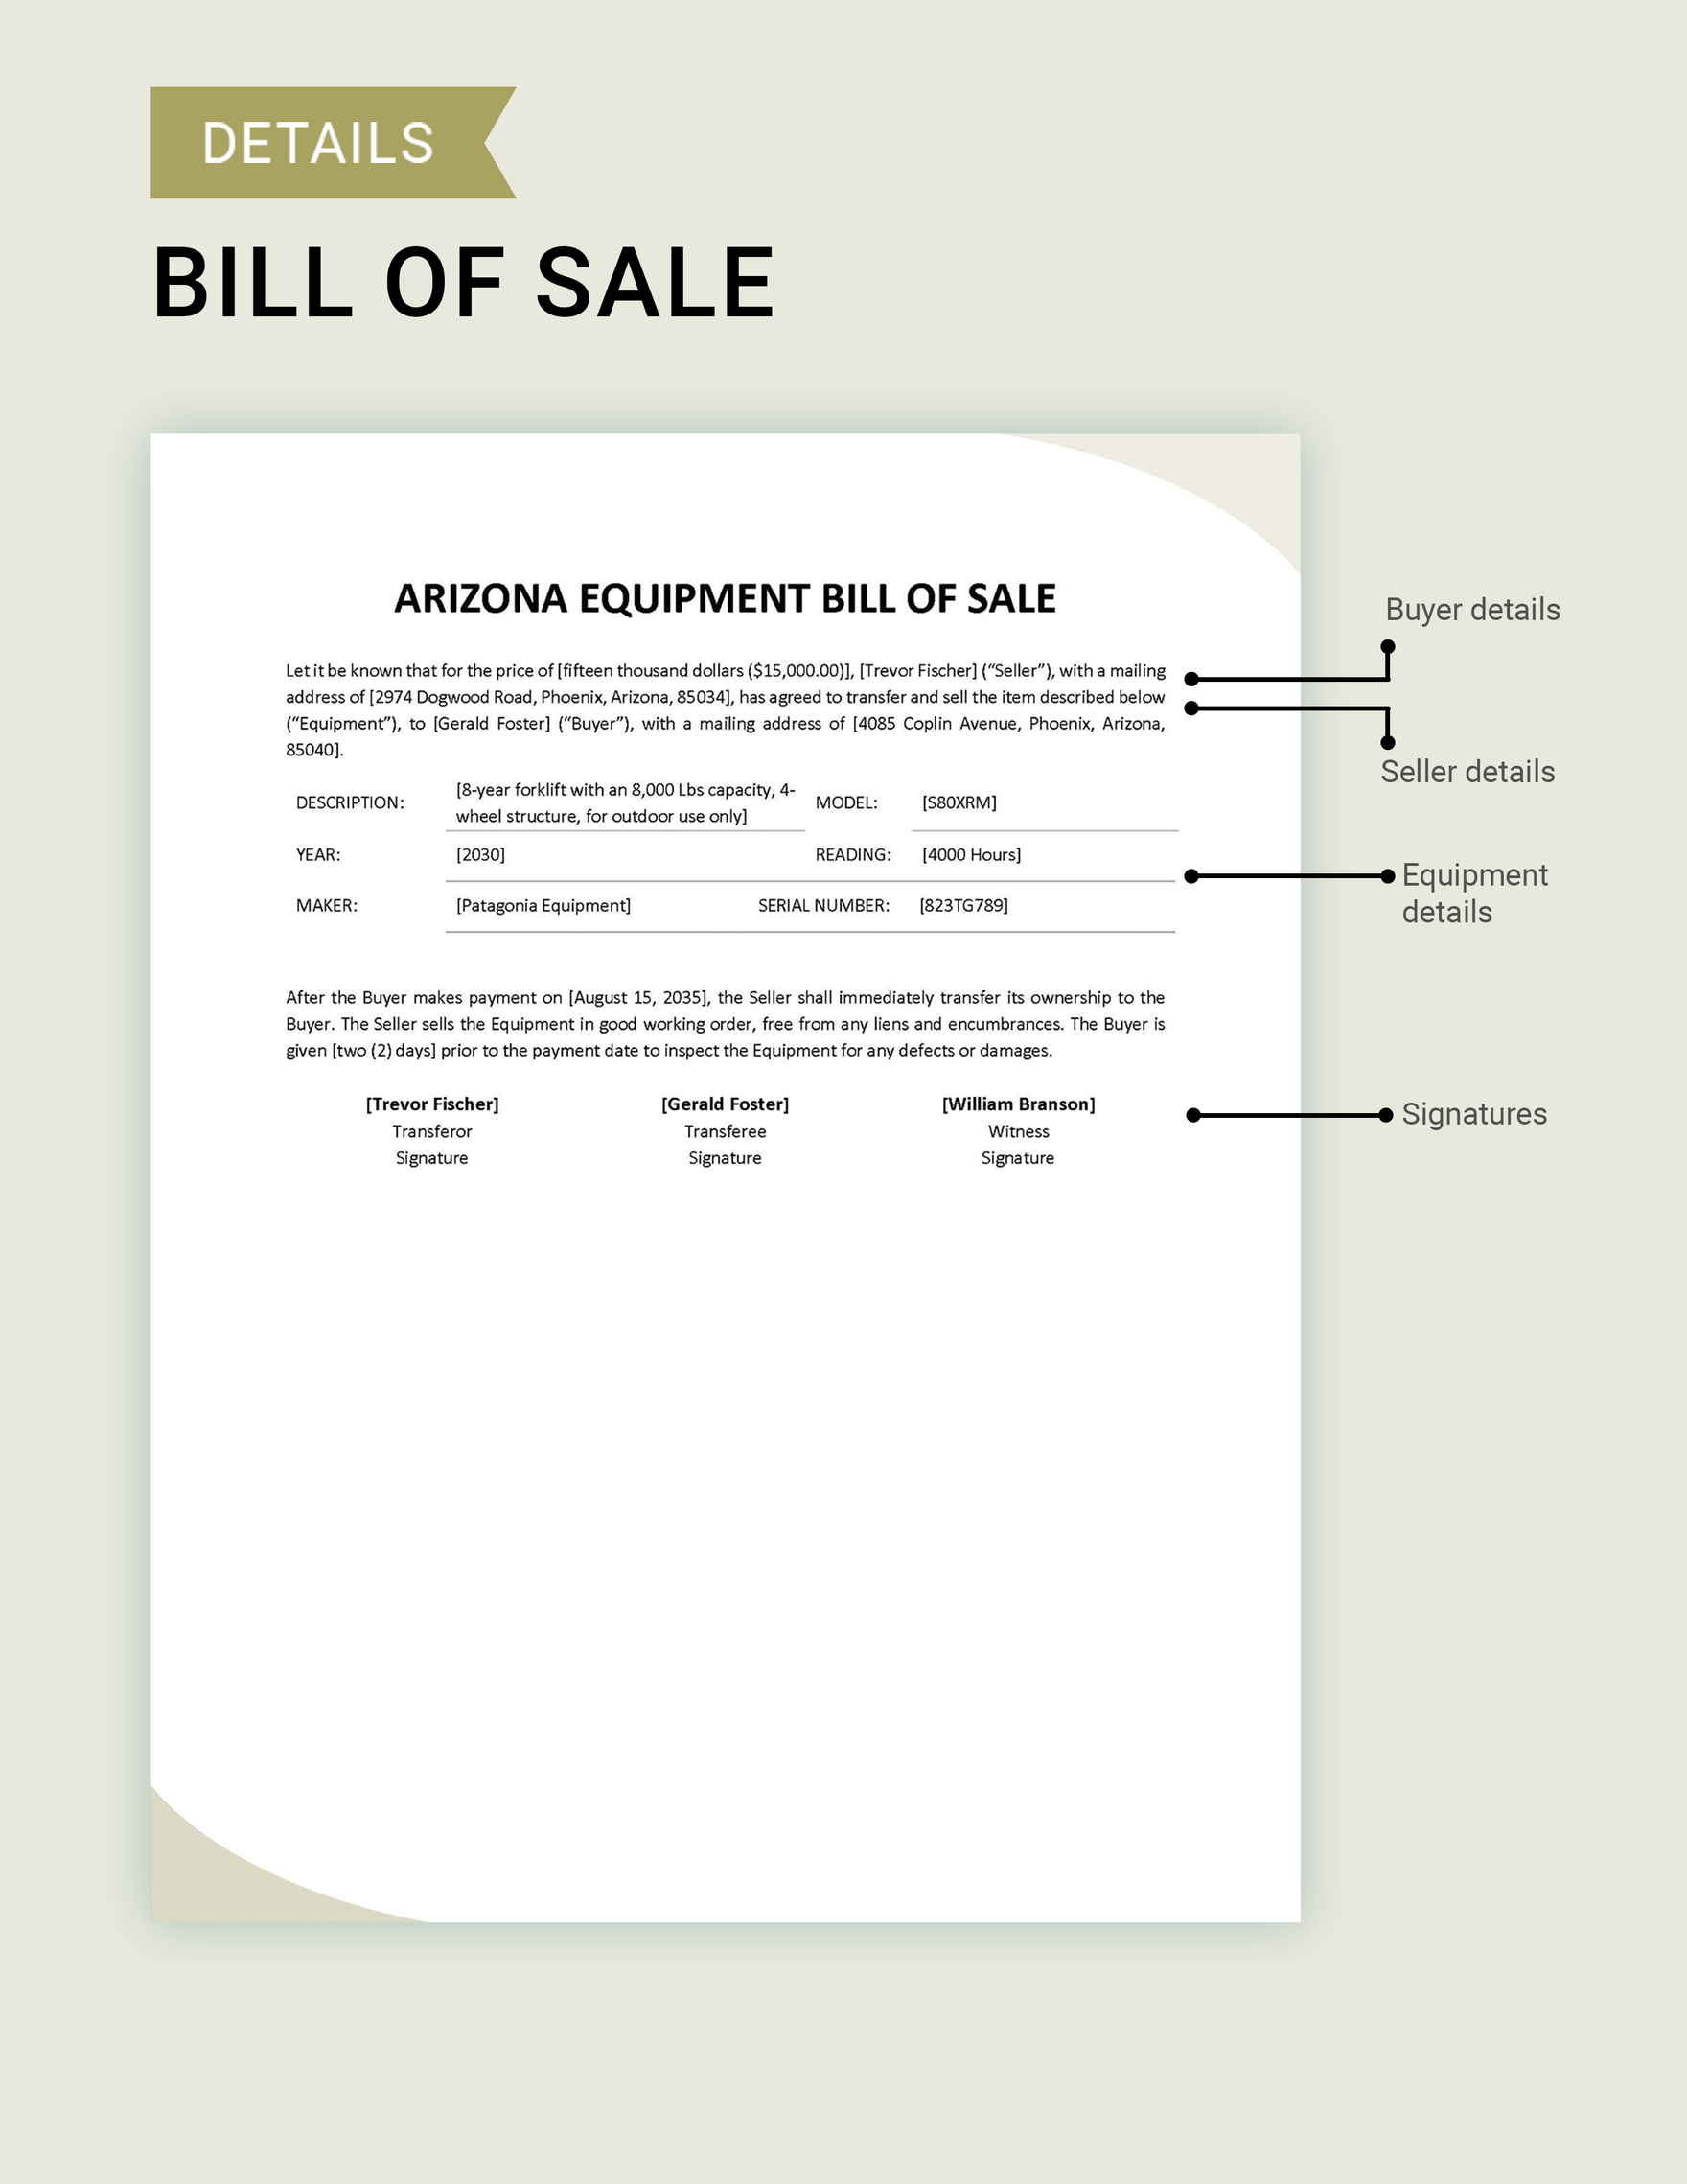 Arizona Equipment Bill of Sale Template